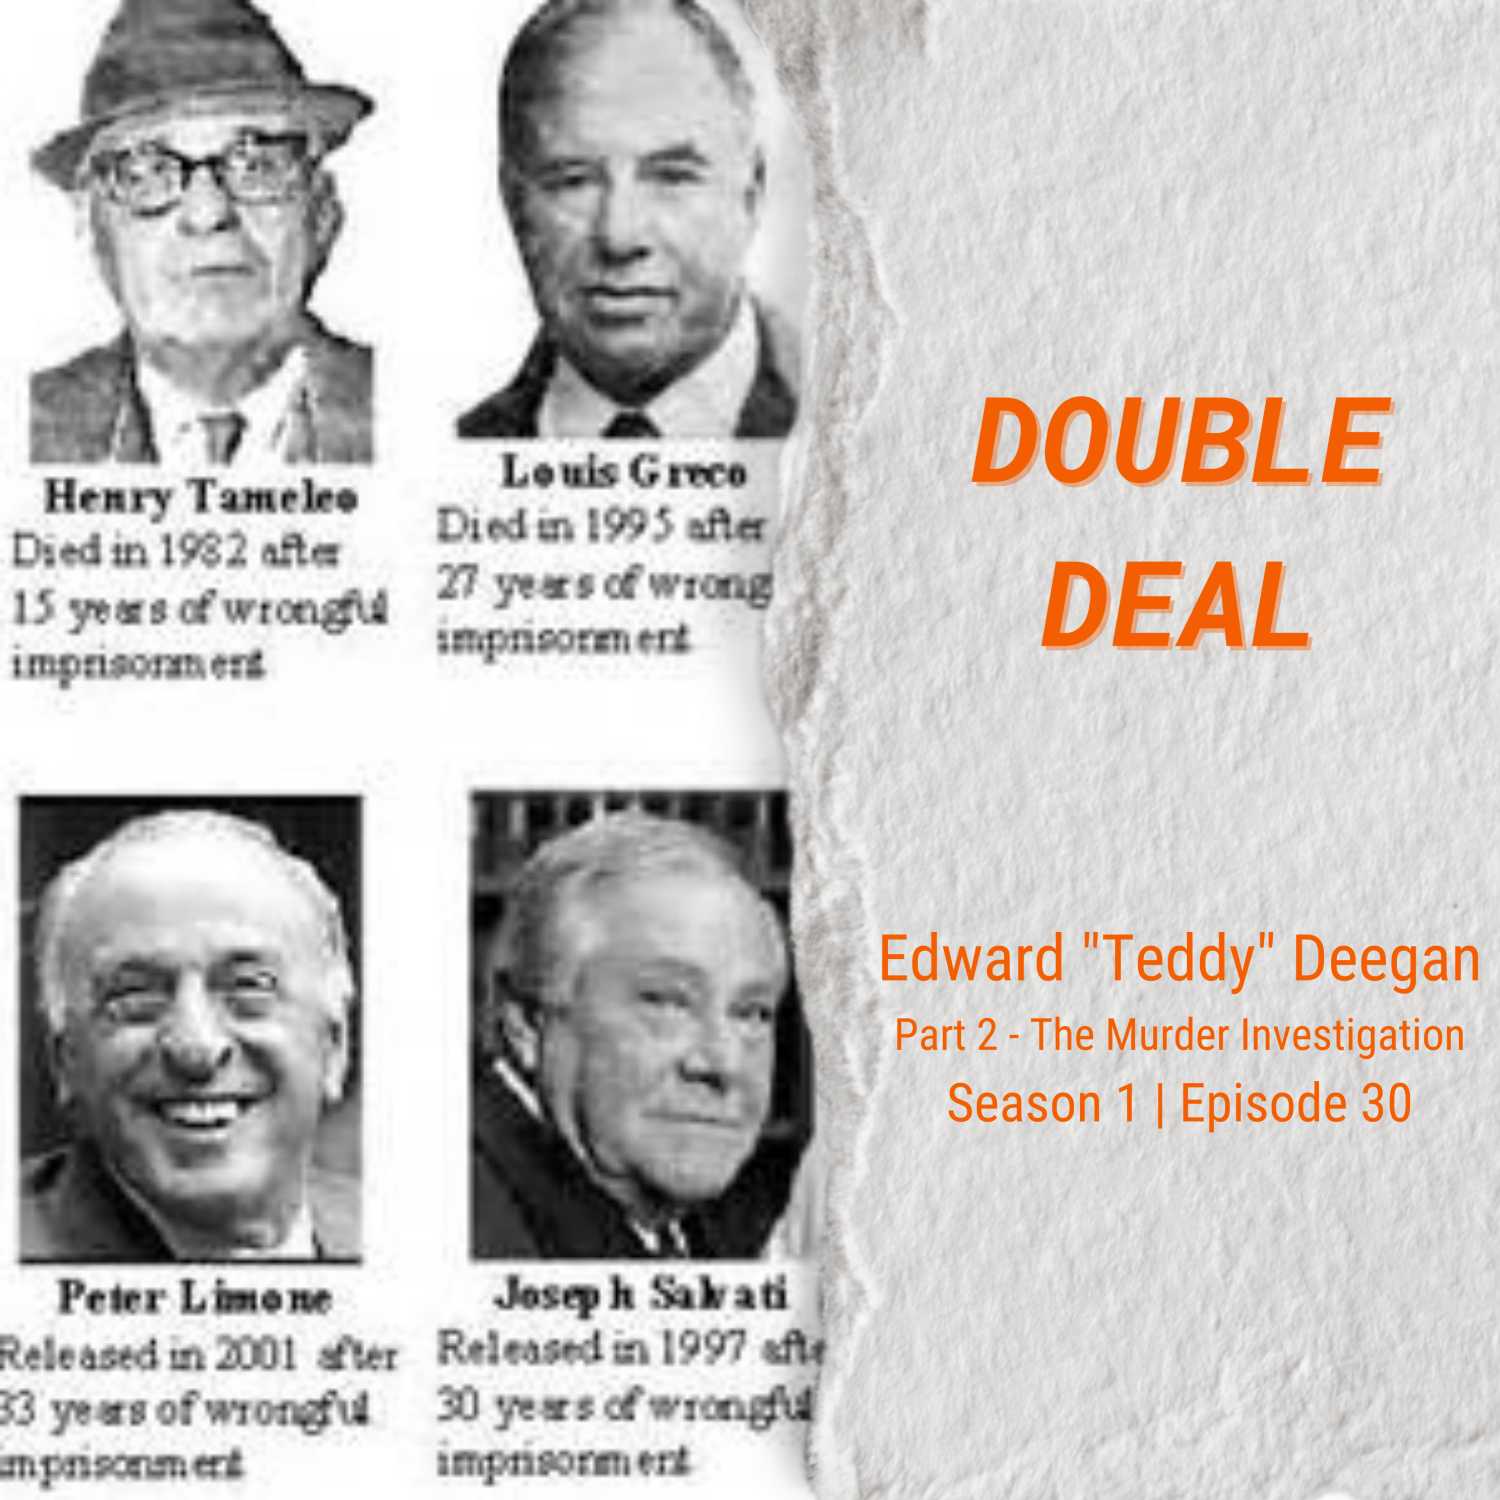 Edward "Teddy" Deegan - Part 2 - The Murder Investigation